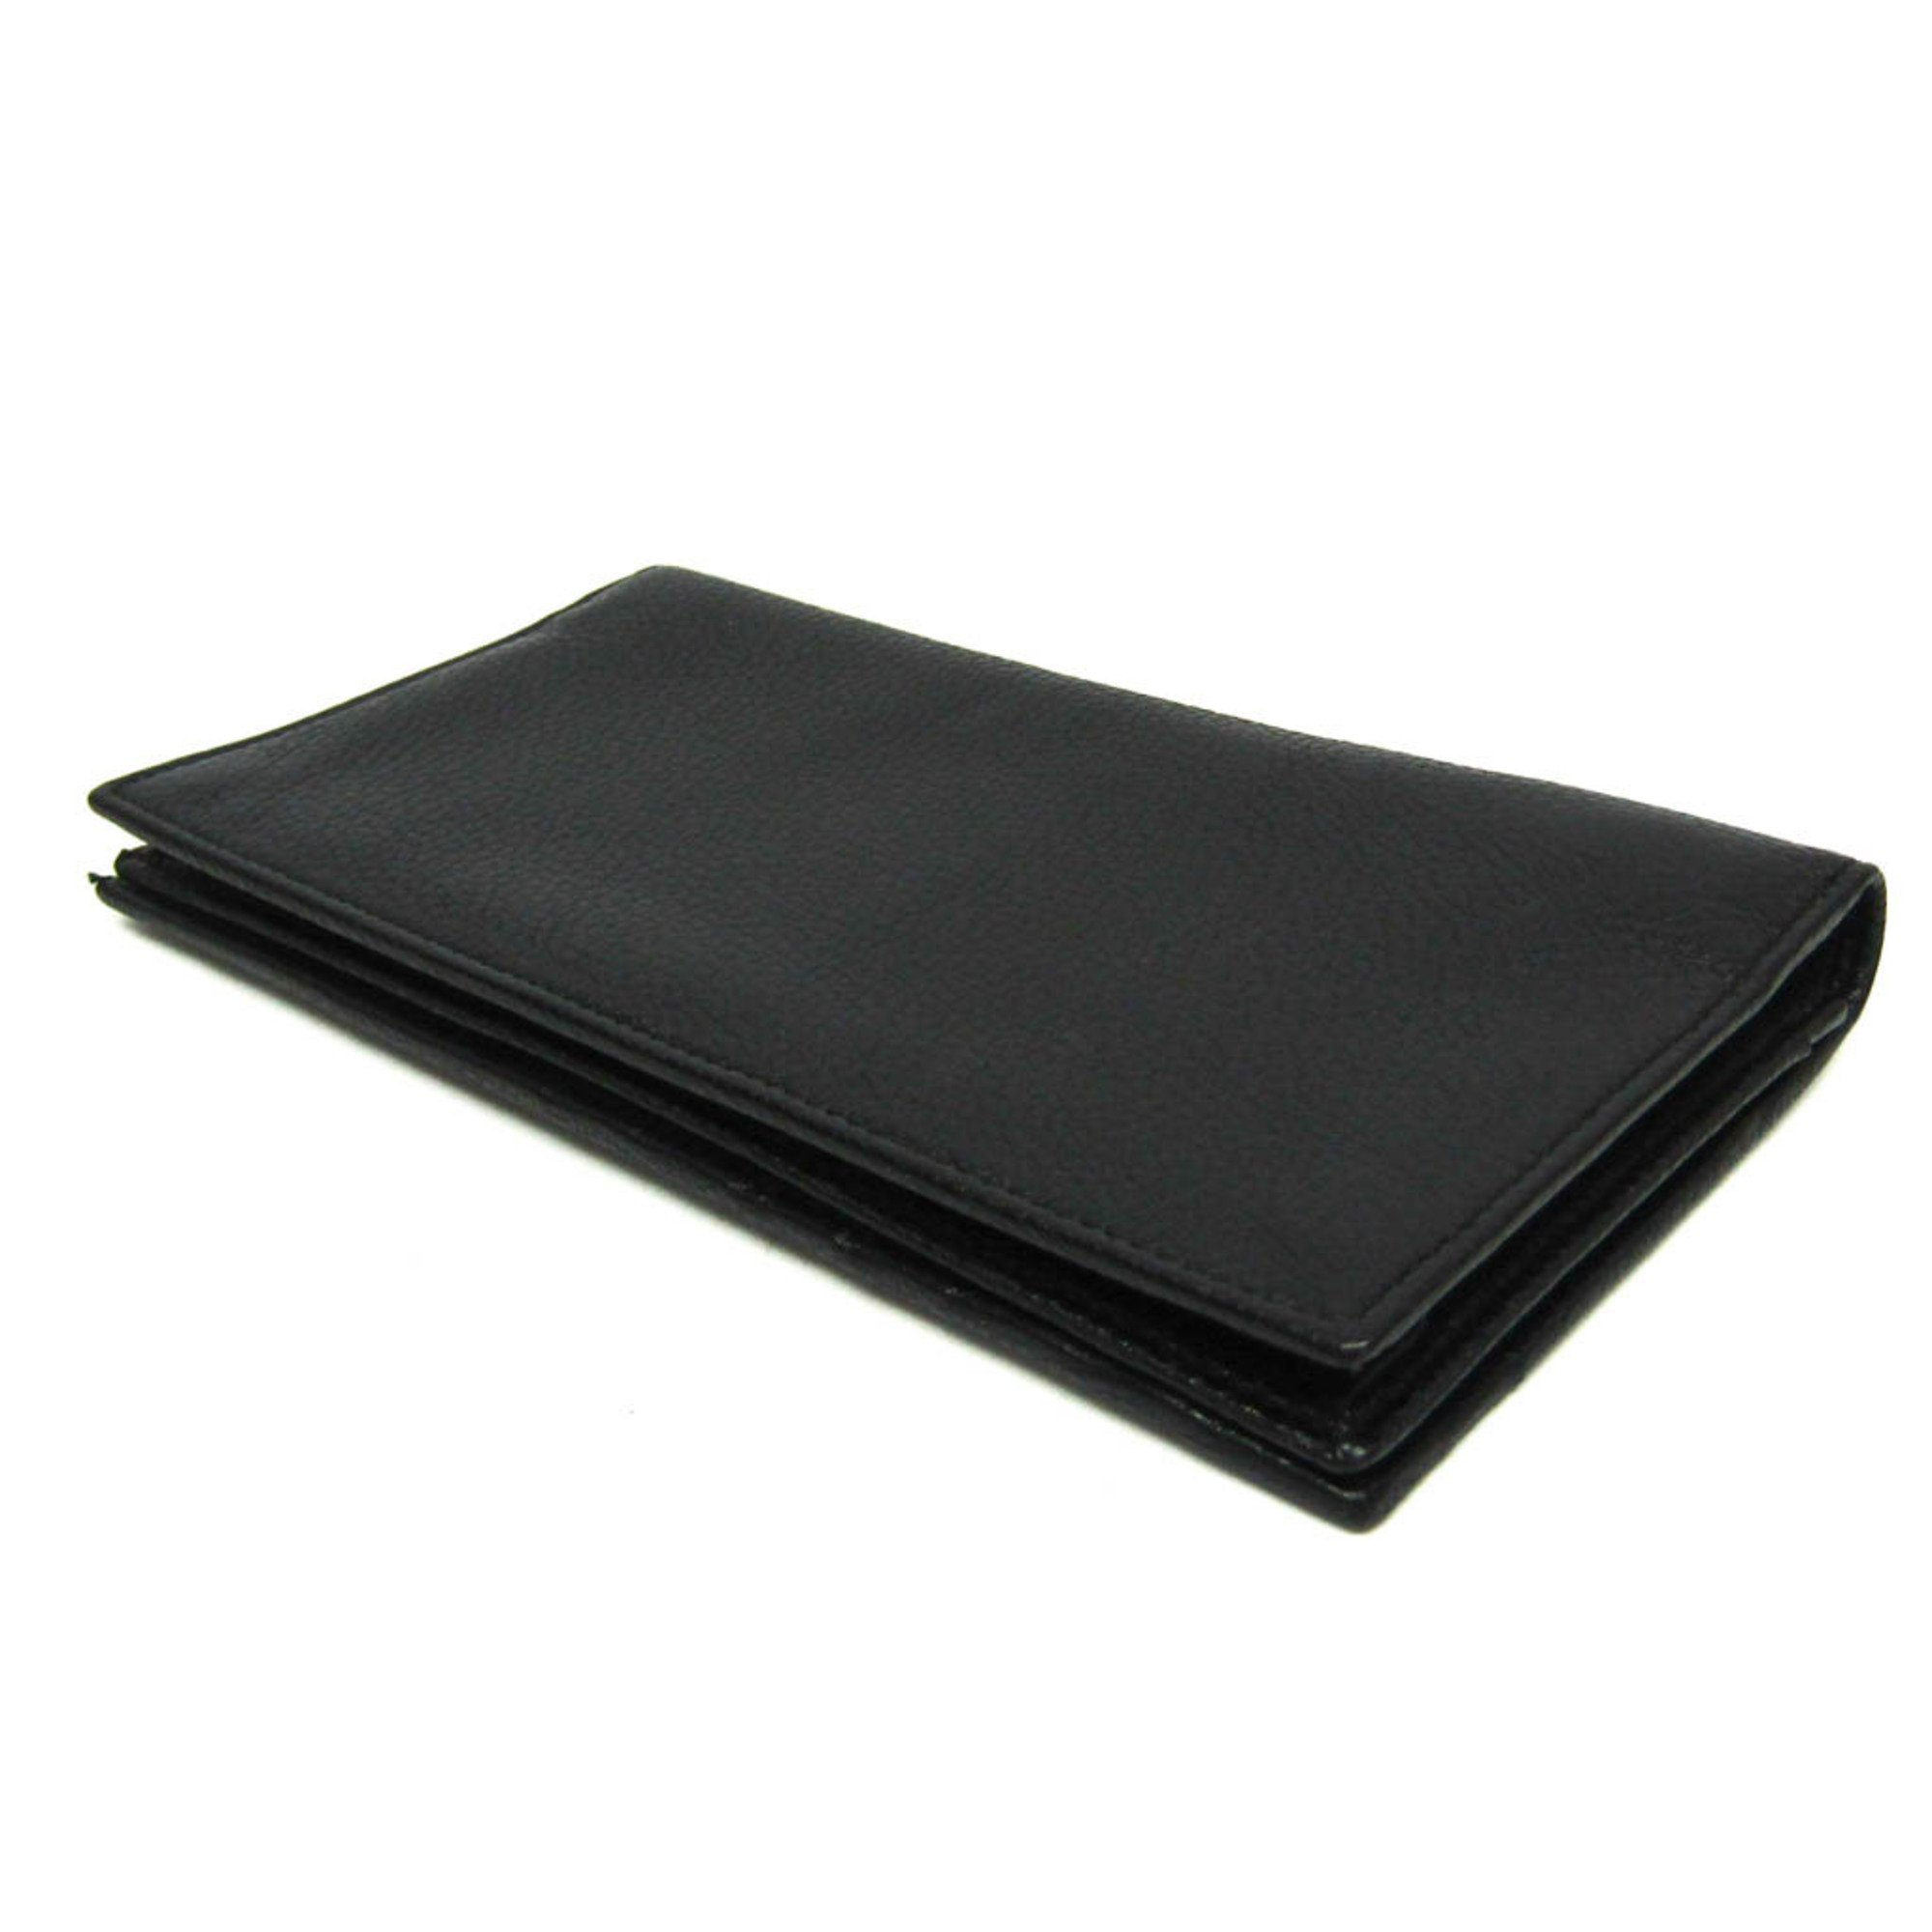 Bvlgari URBAN 33402 Men's Leather Long Wallet (bi-fold) Black